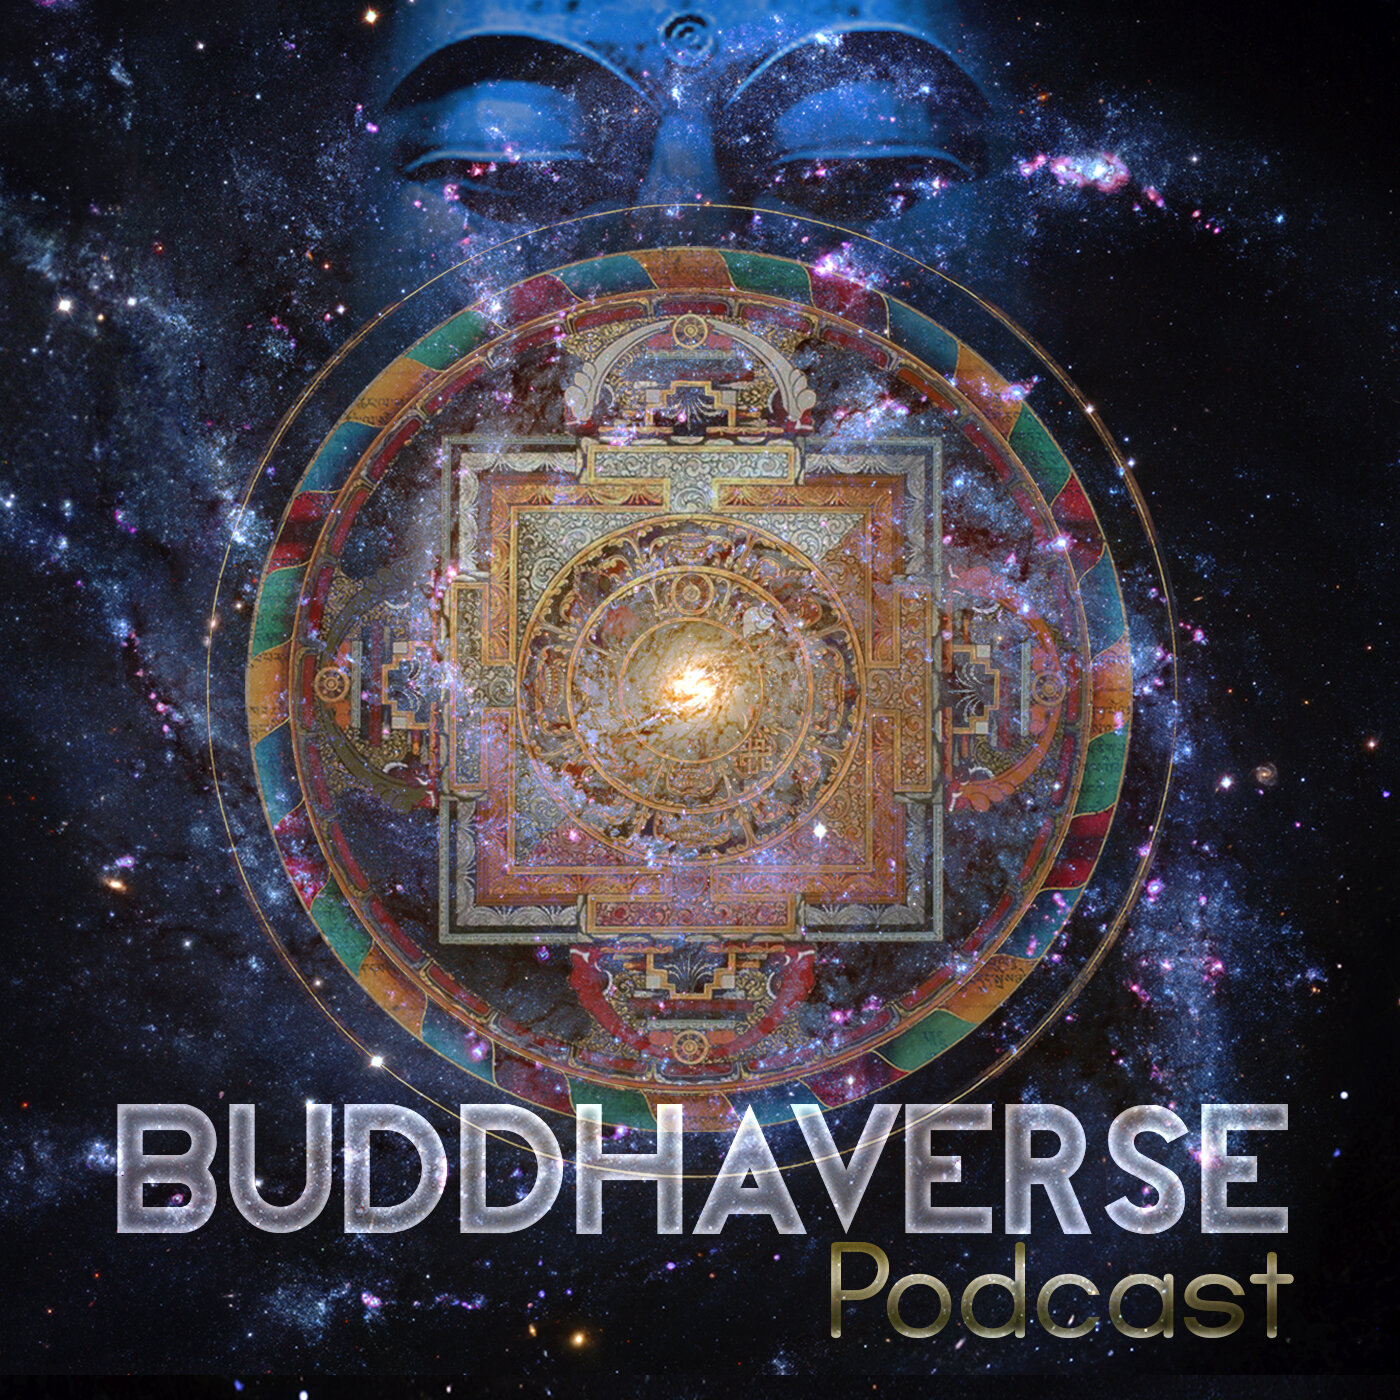 Buddhaverse Podcast